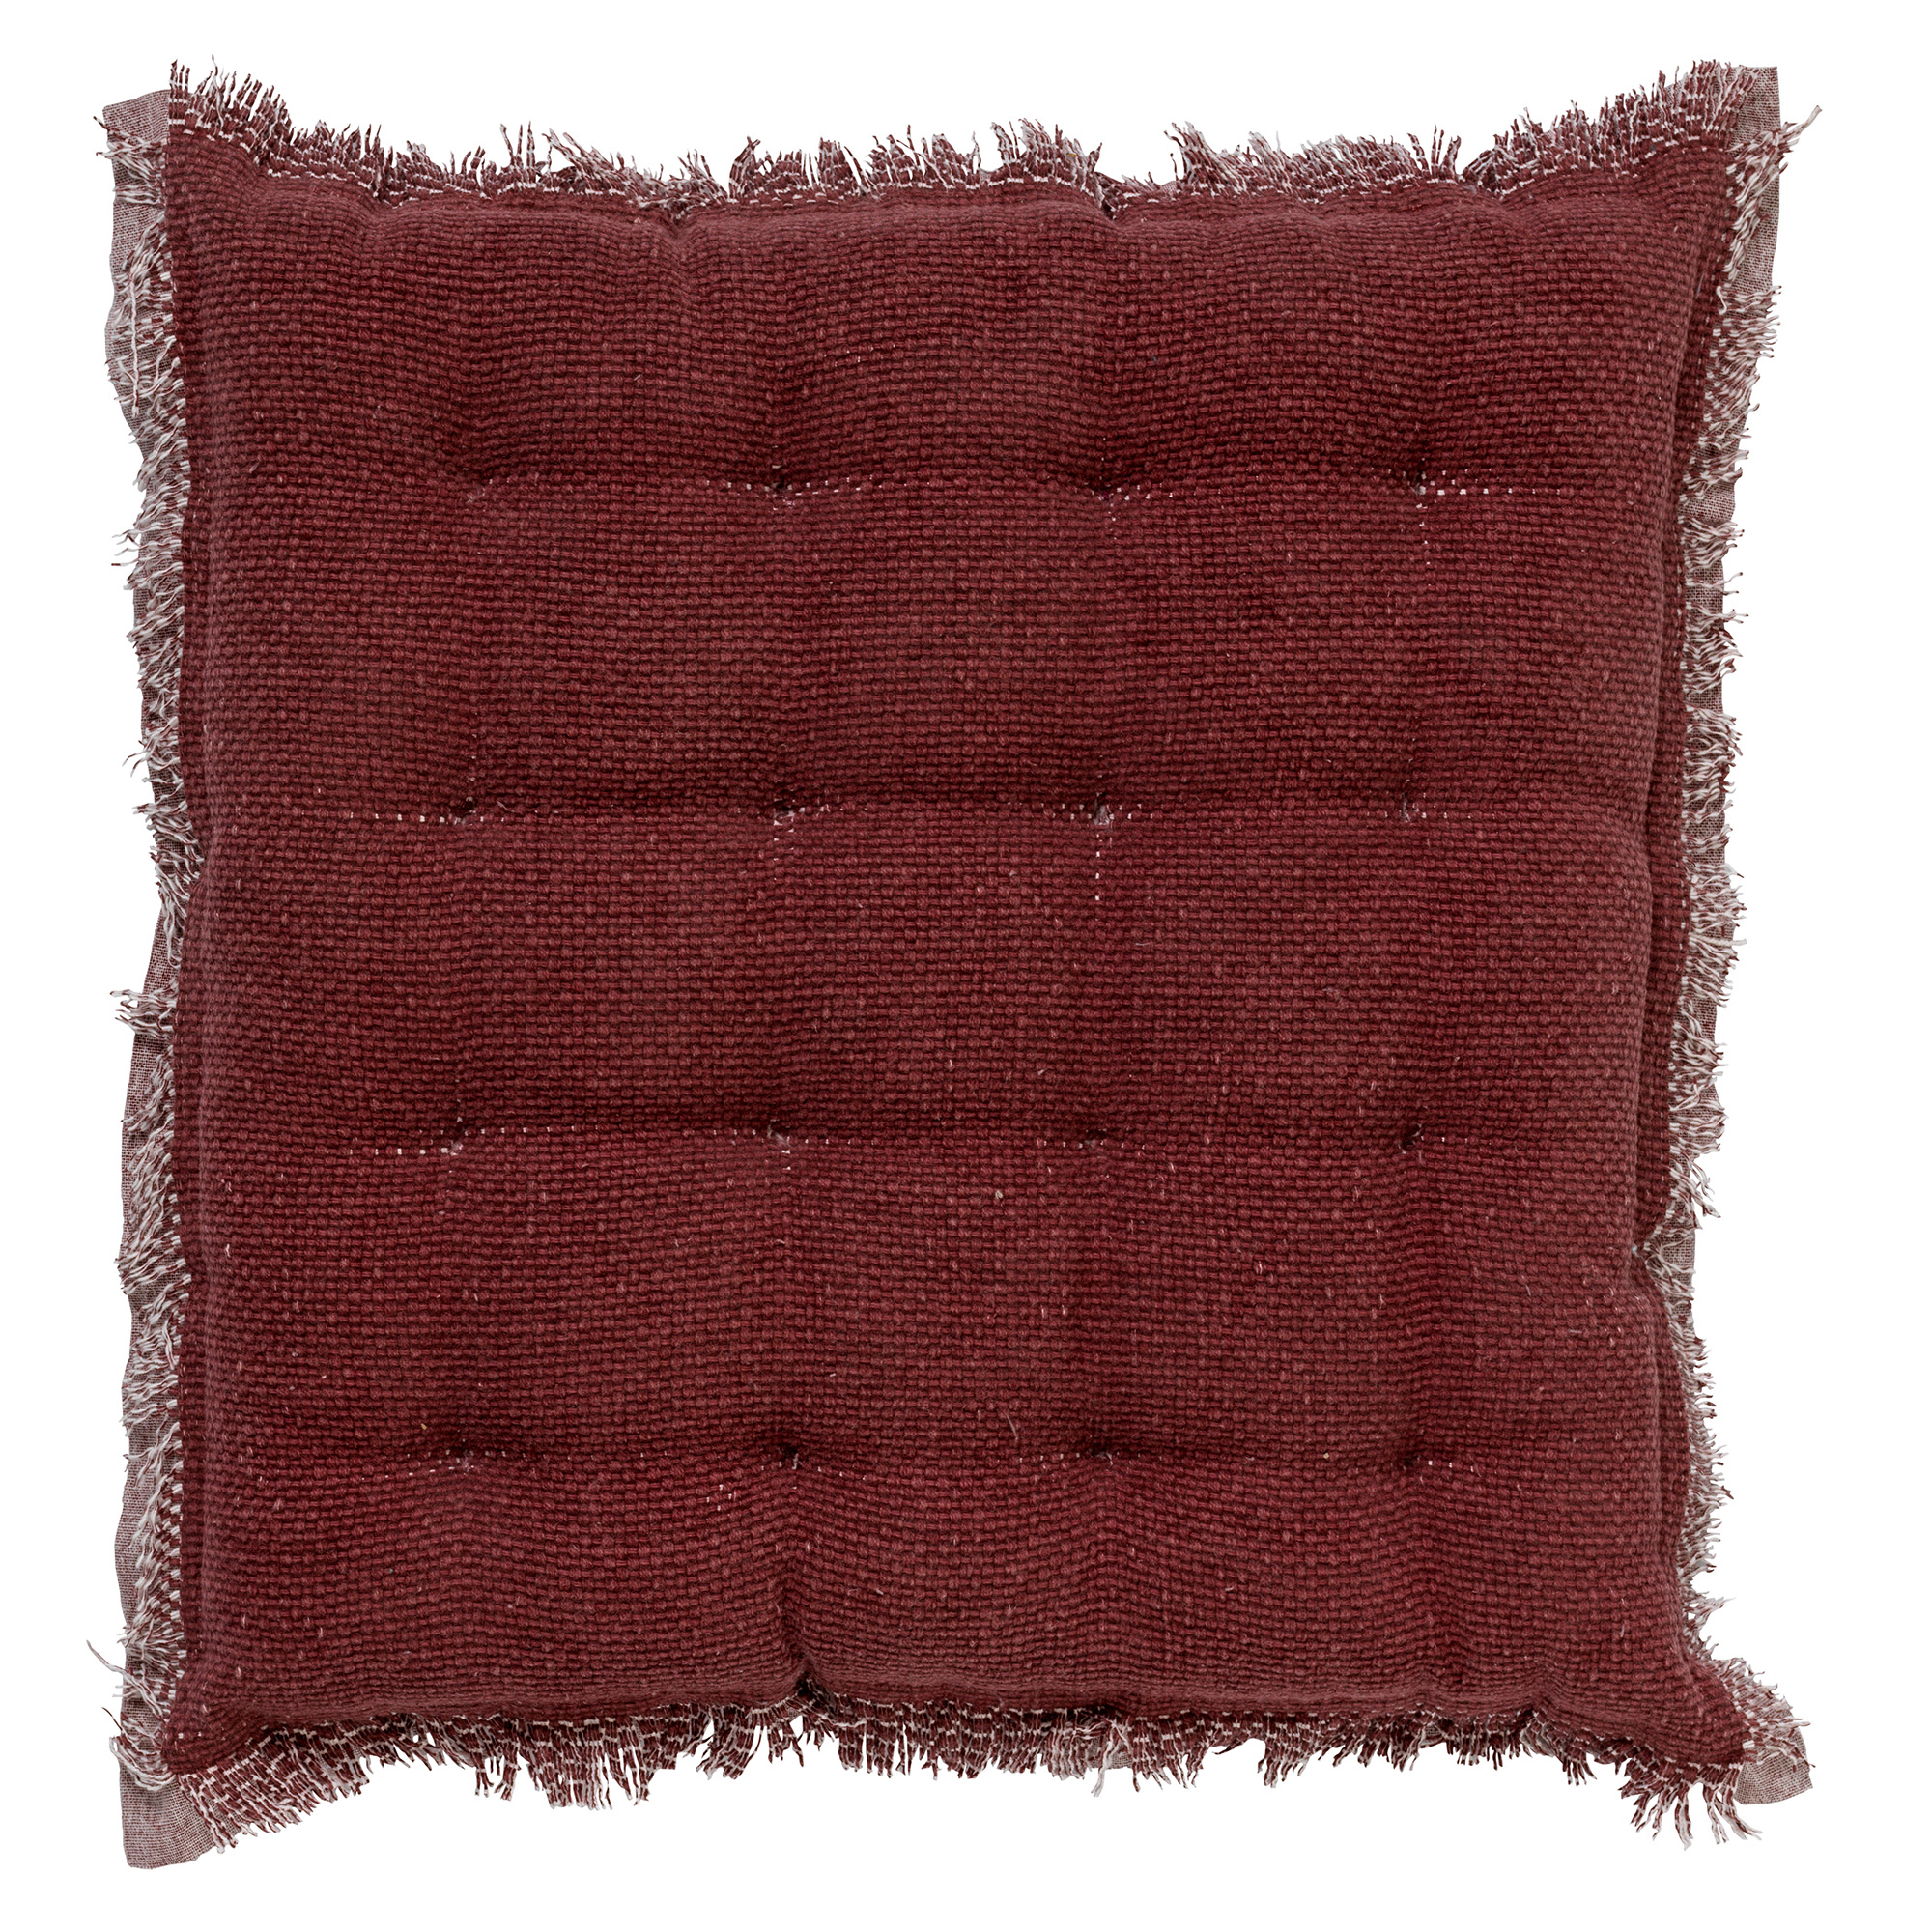 BURTO - Seat pad cushion washed coton Merlot 40x40 cm